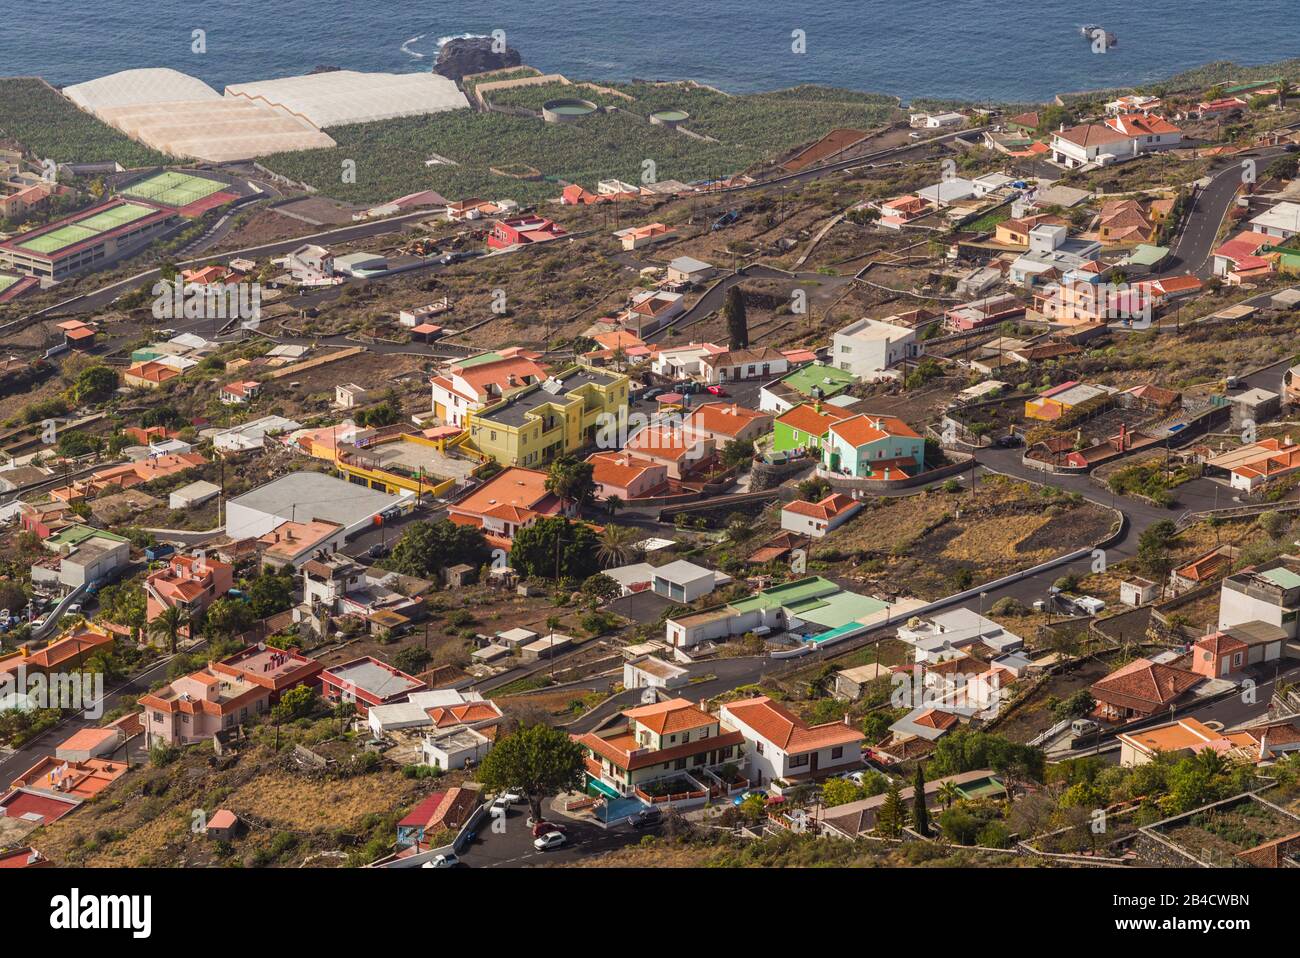 Spain, Canary Islands, La Palma Island, Las Indias, elevated town view Stock Photo